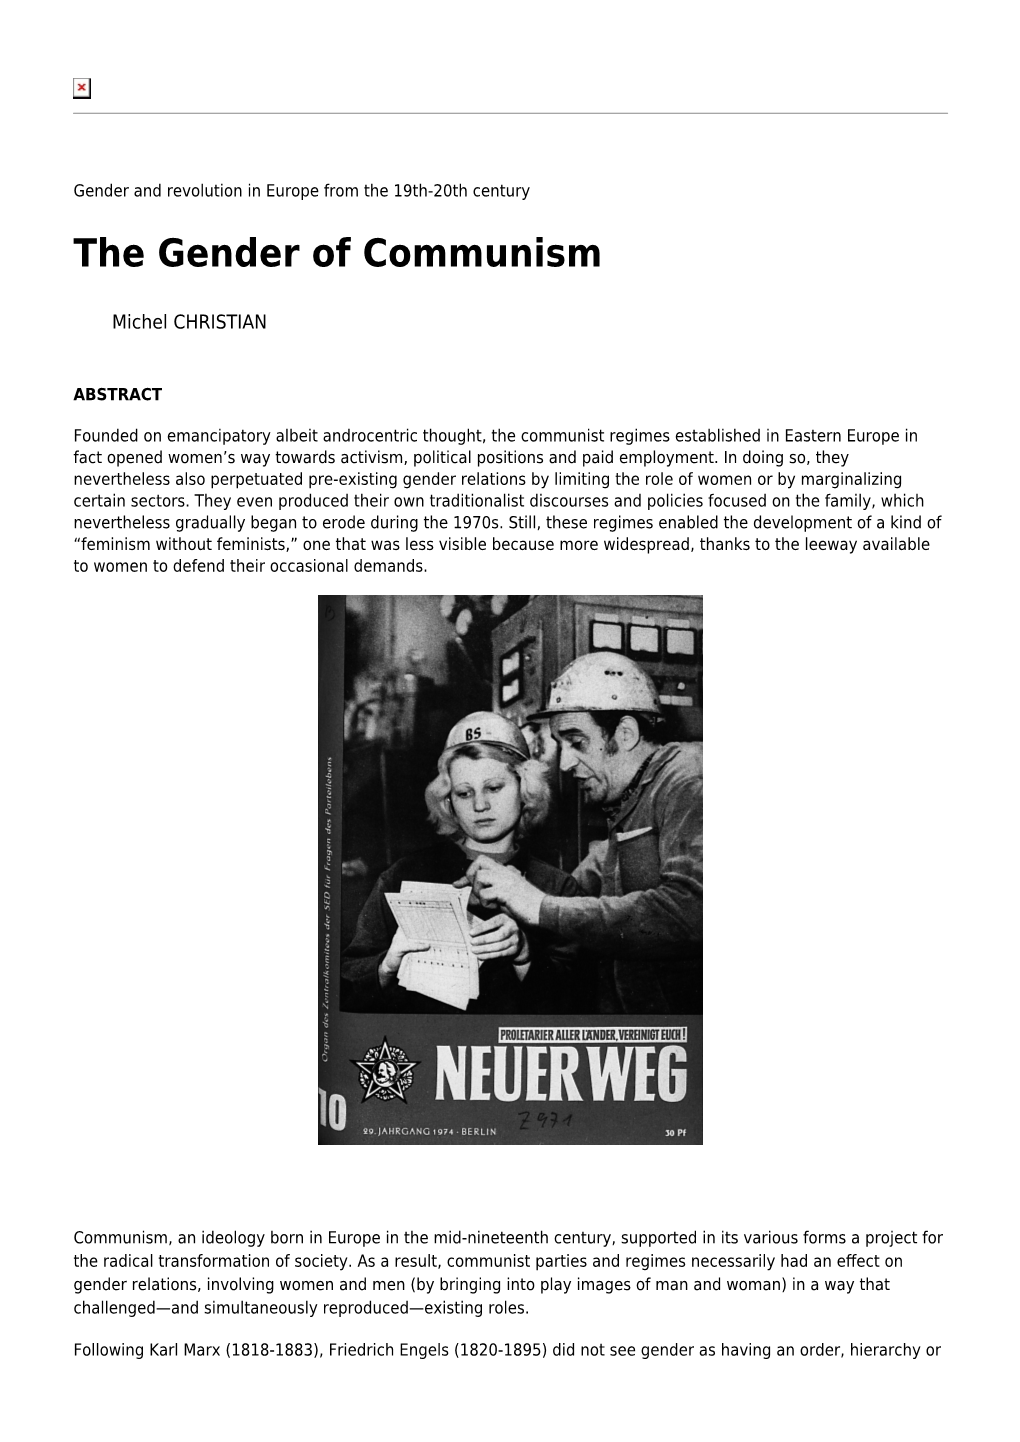 The Gender of Communism